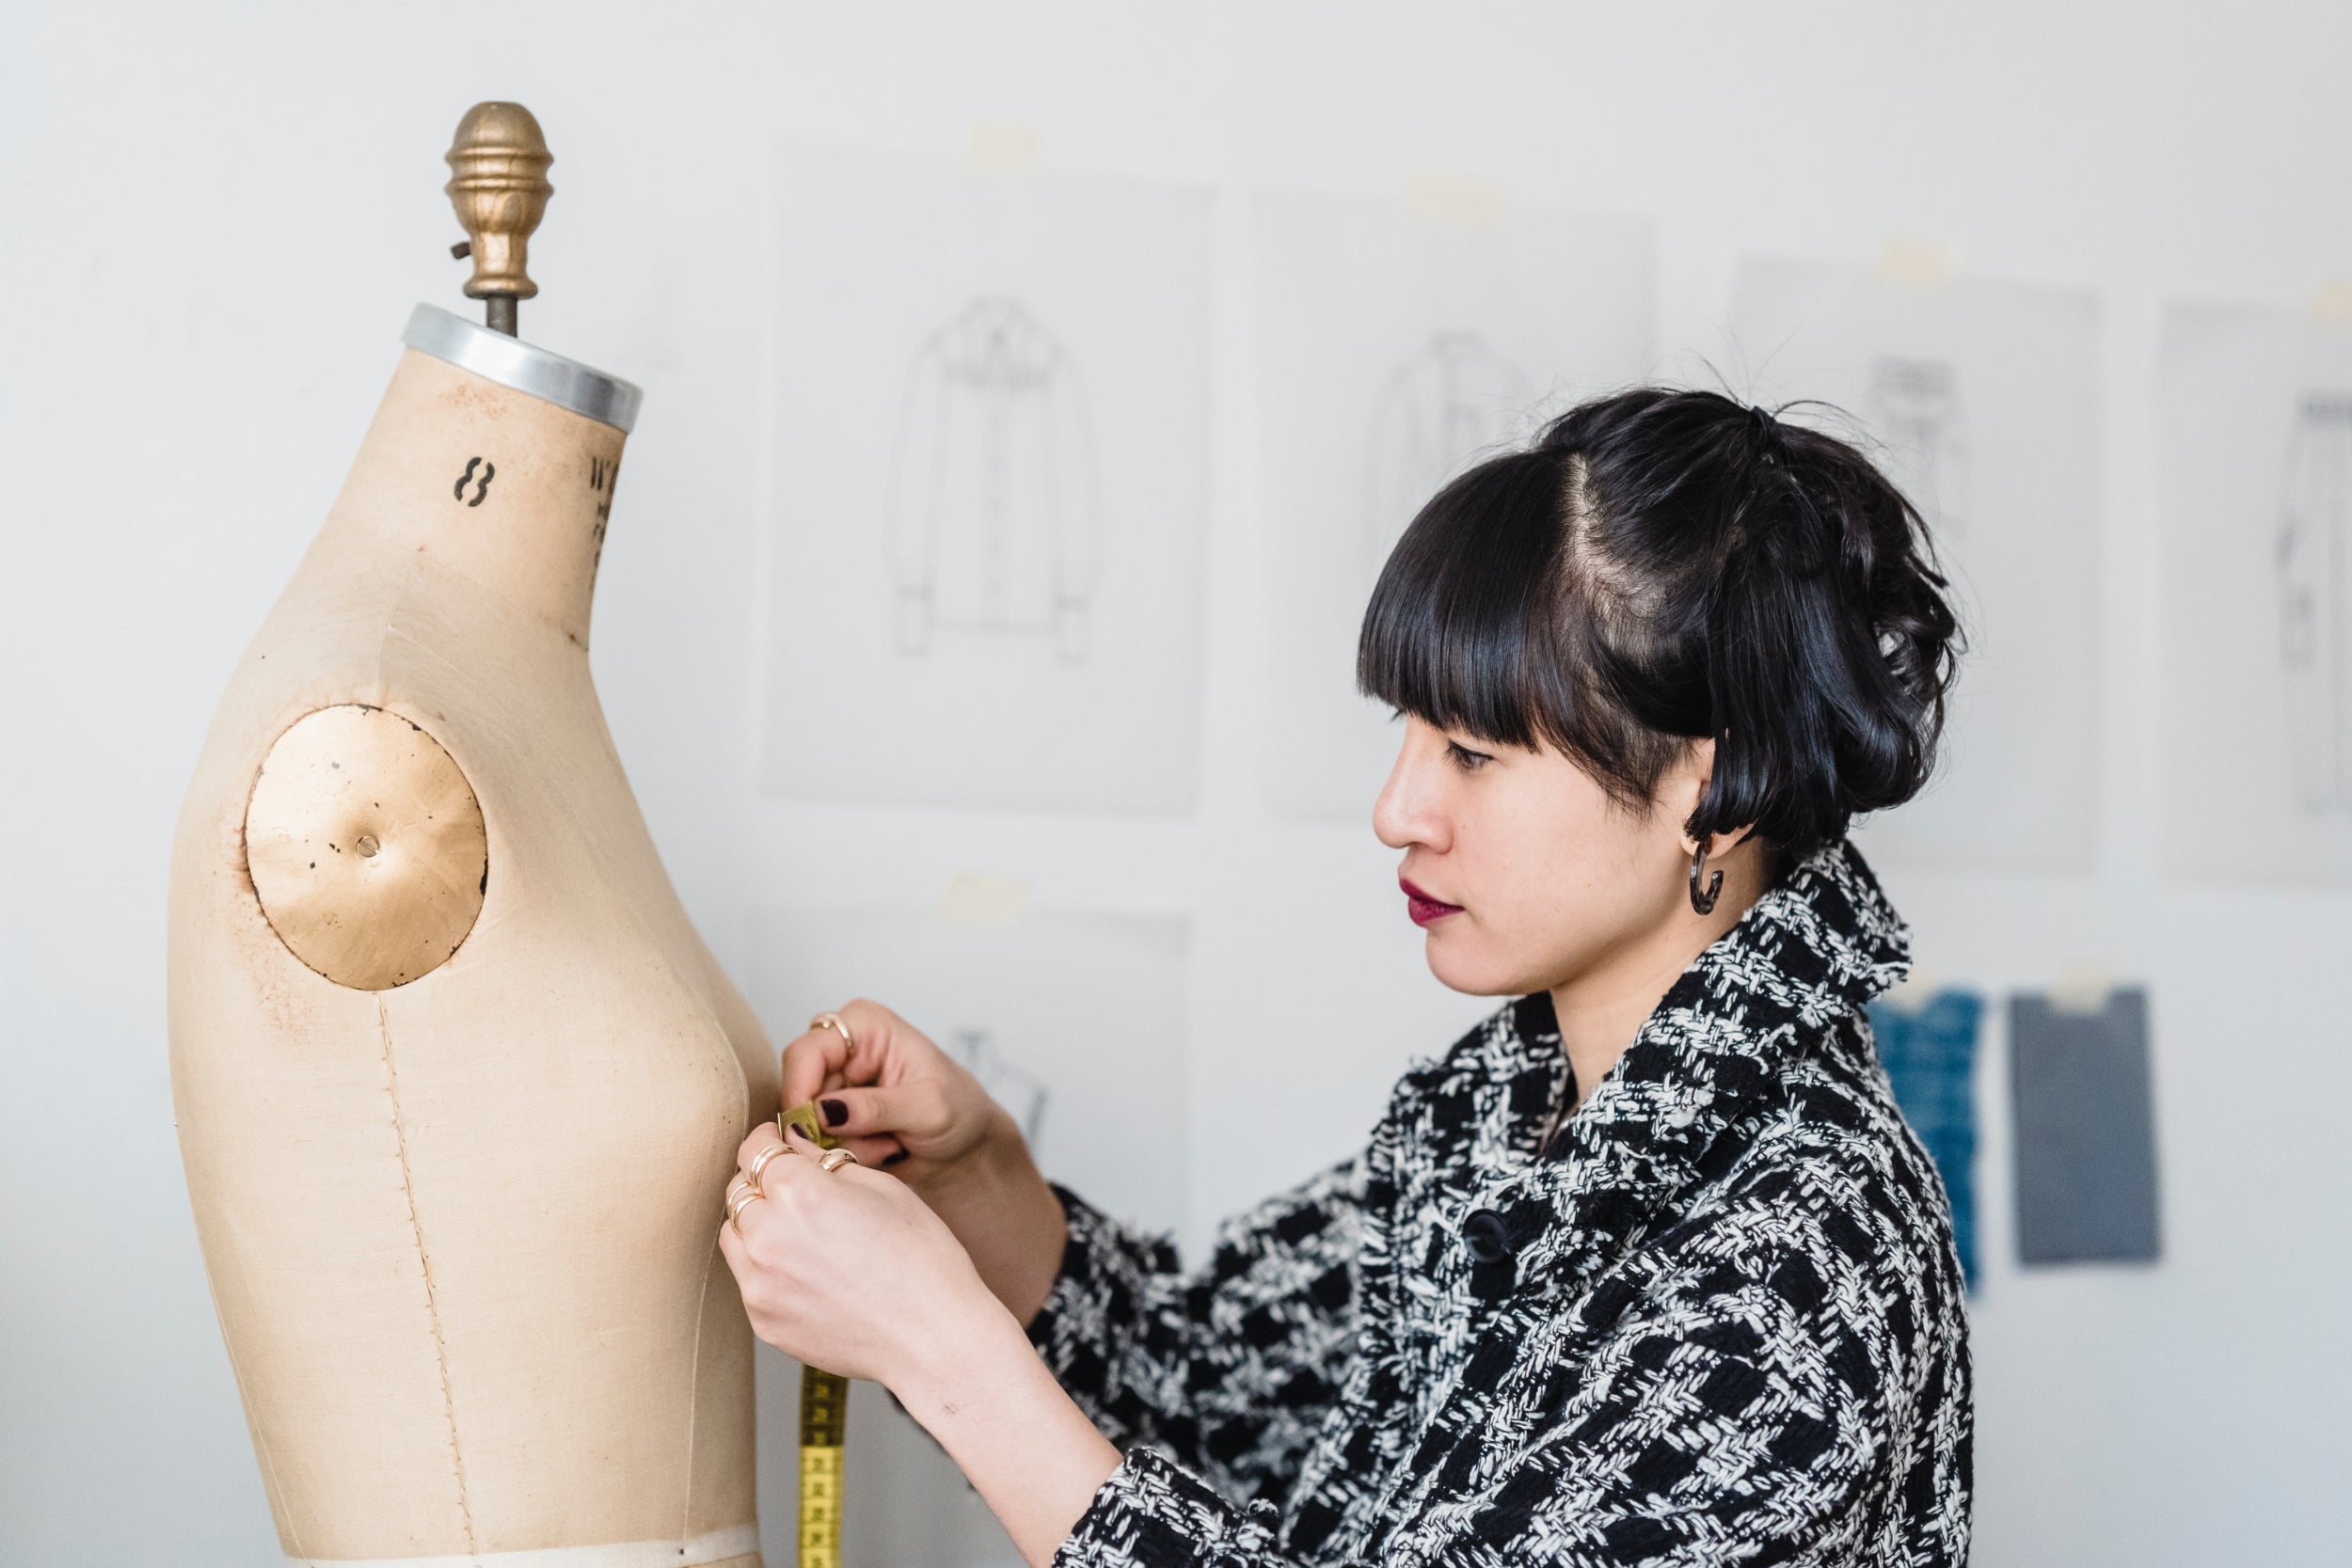 A person measures a dressmaker's form